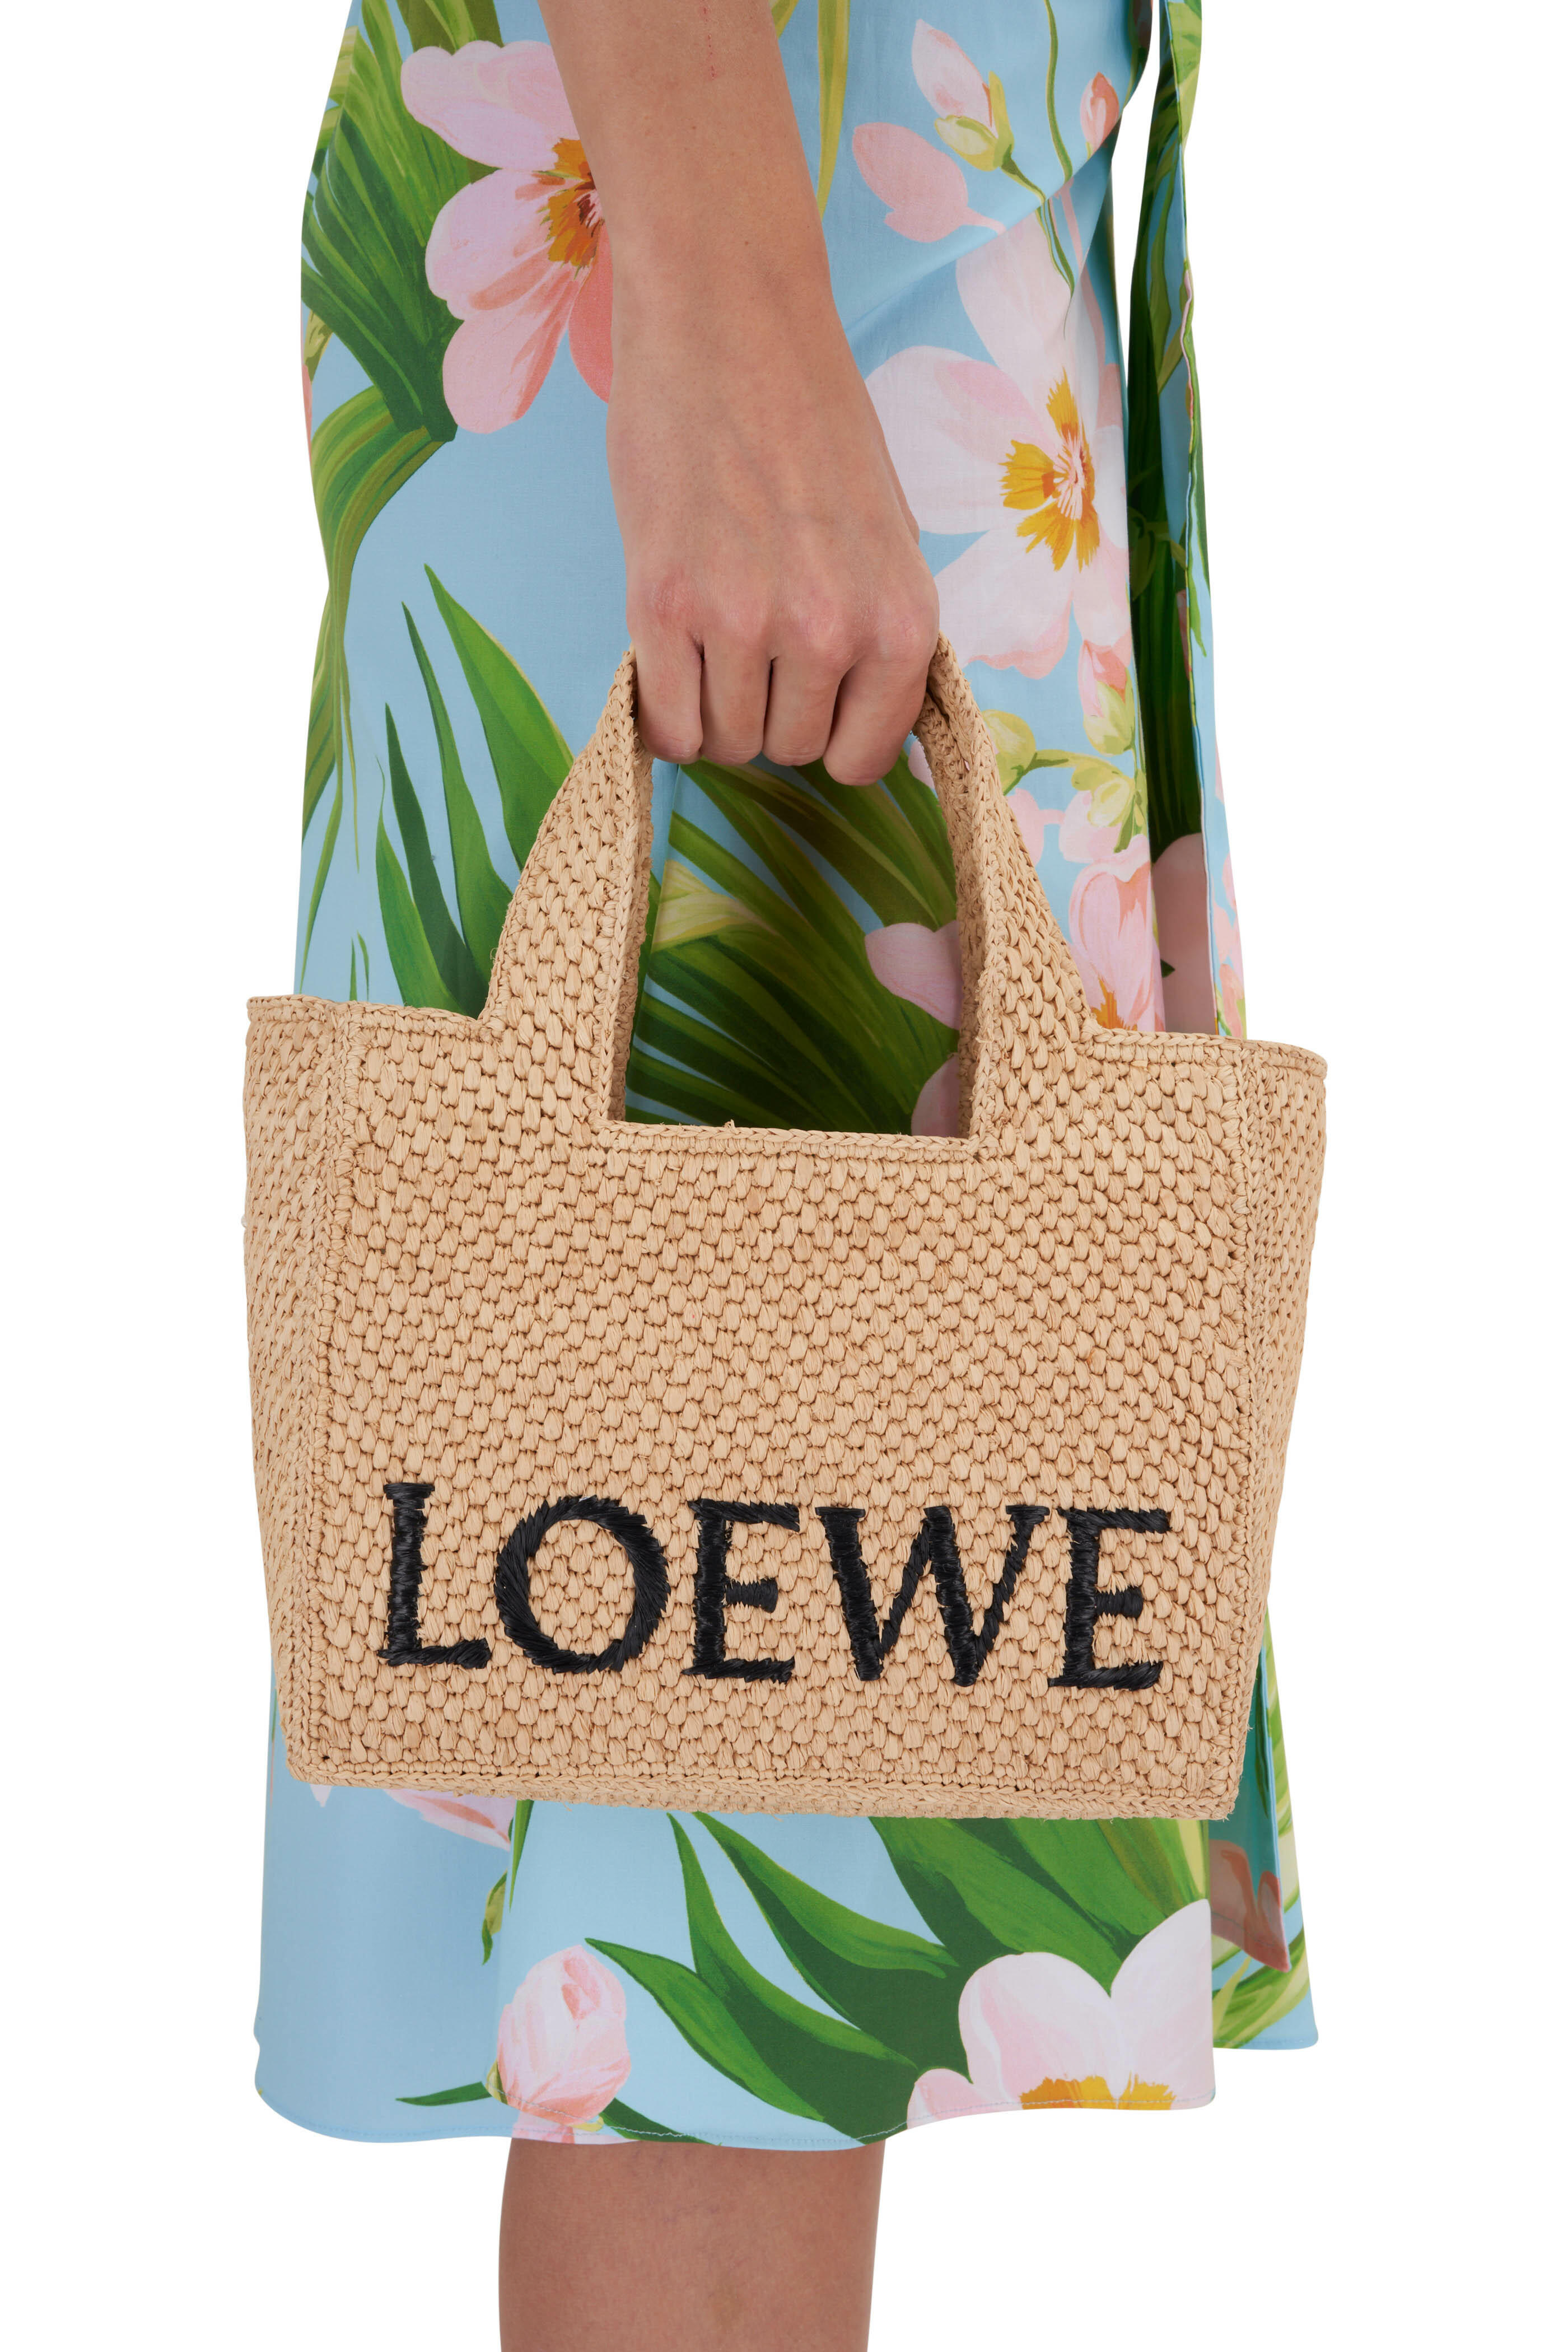 Shop Loewe Travel Totes for Women